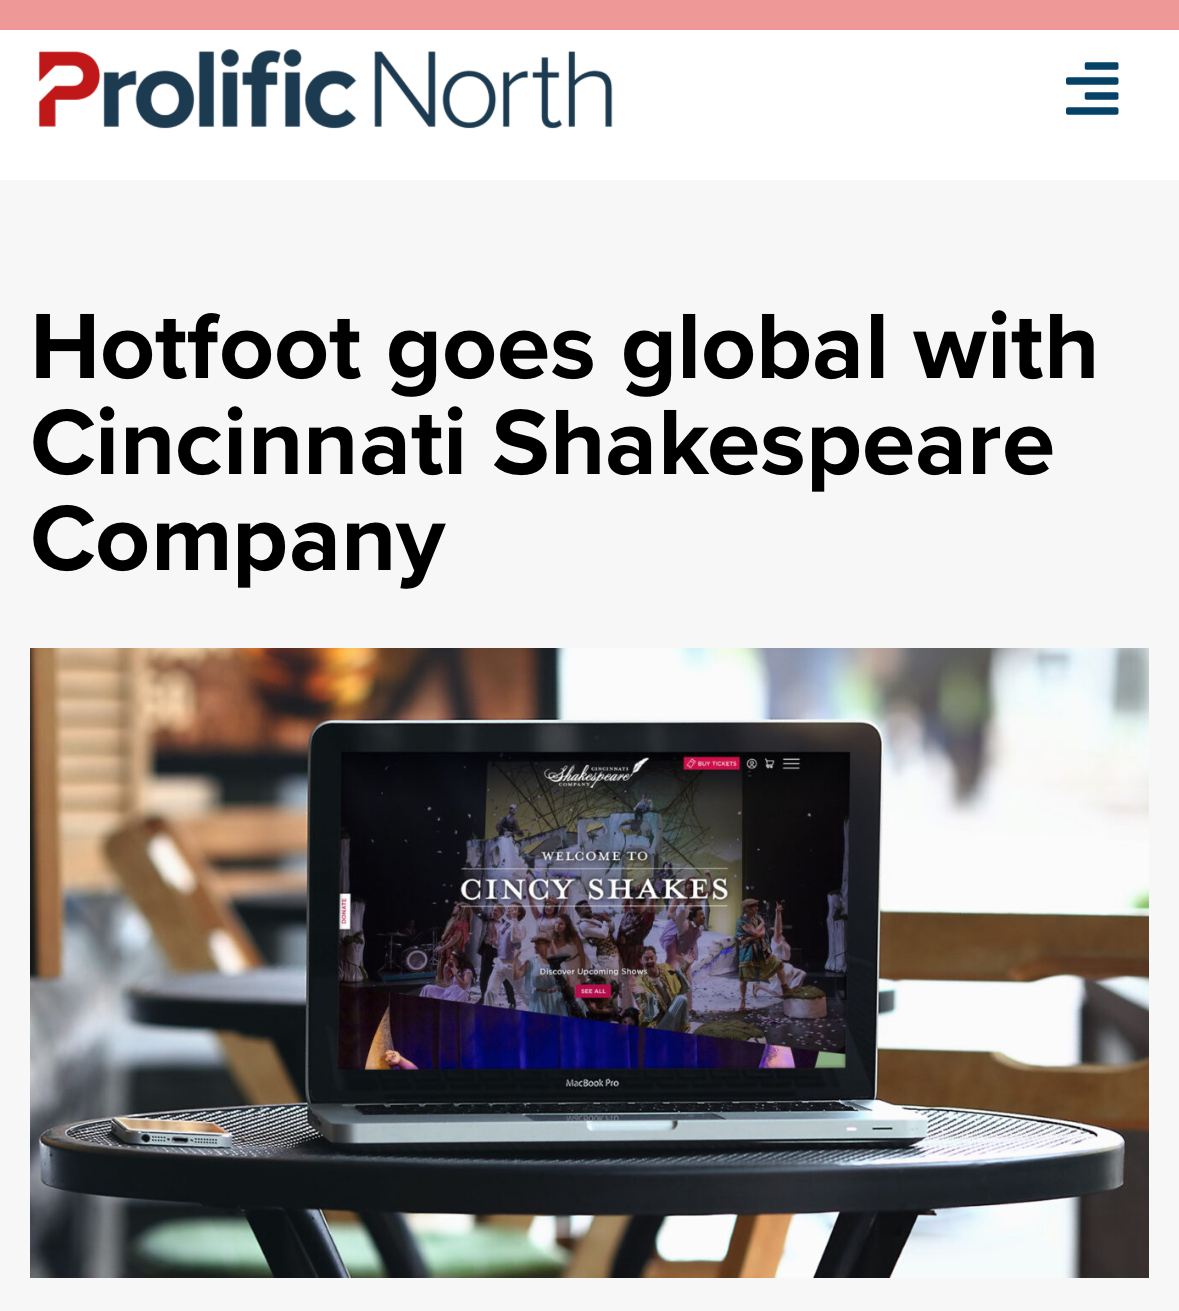 Hotfoot goes global